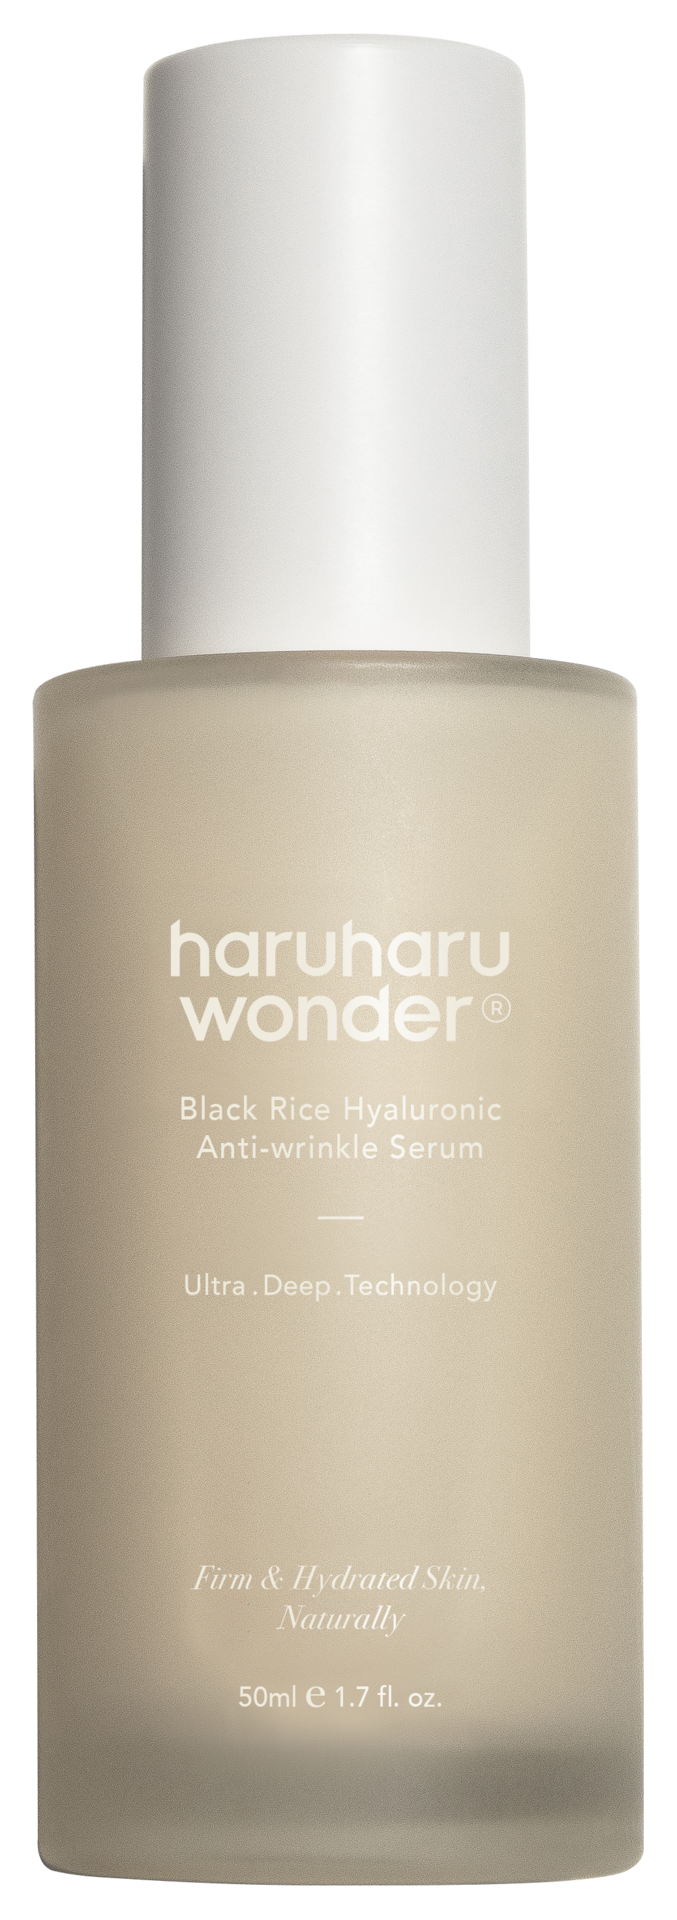 Haruharu Wonder Black Rice Hyaluronic Anti-wrinkle Serum 50ml